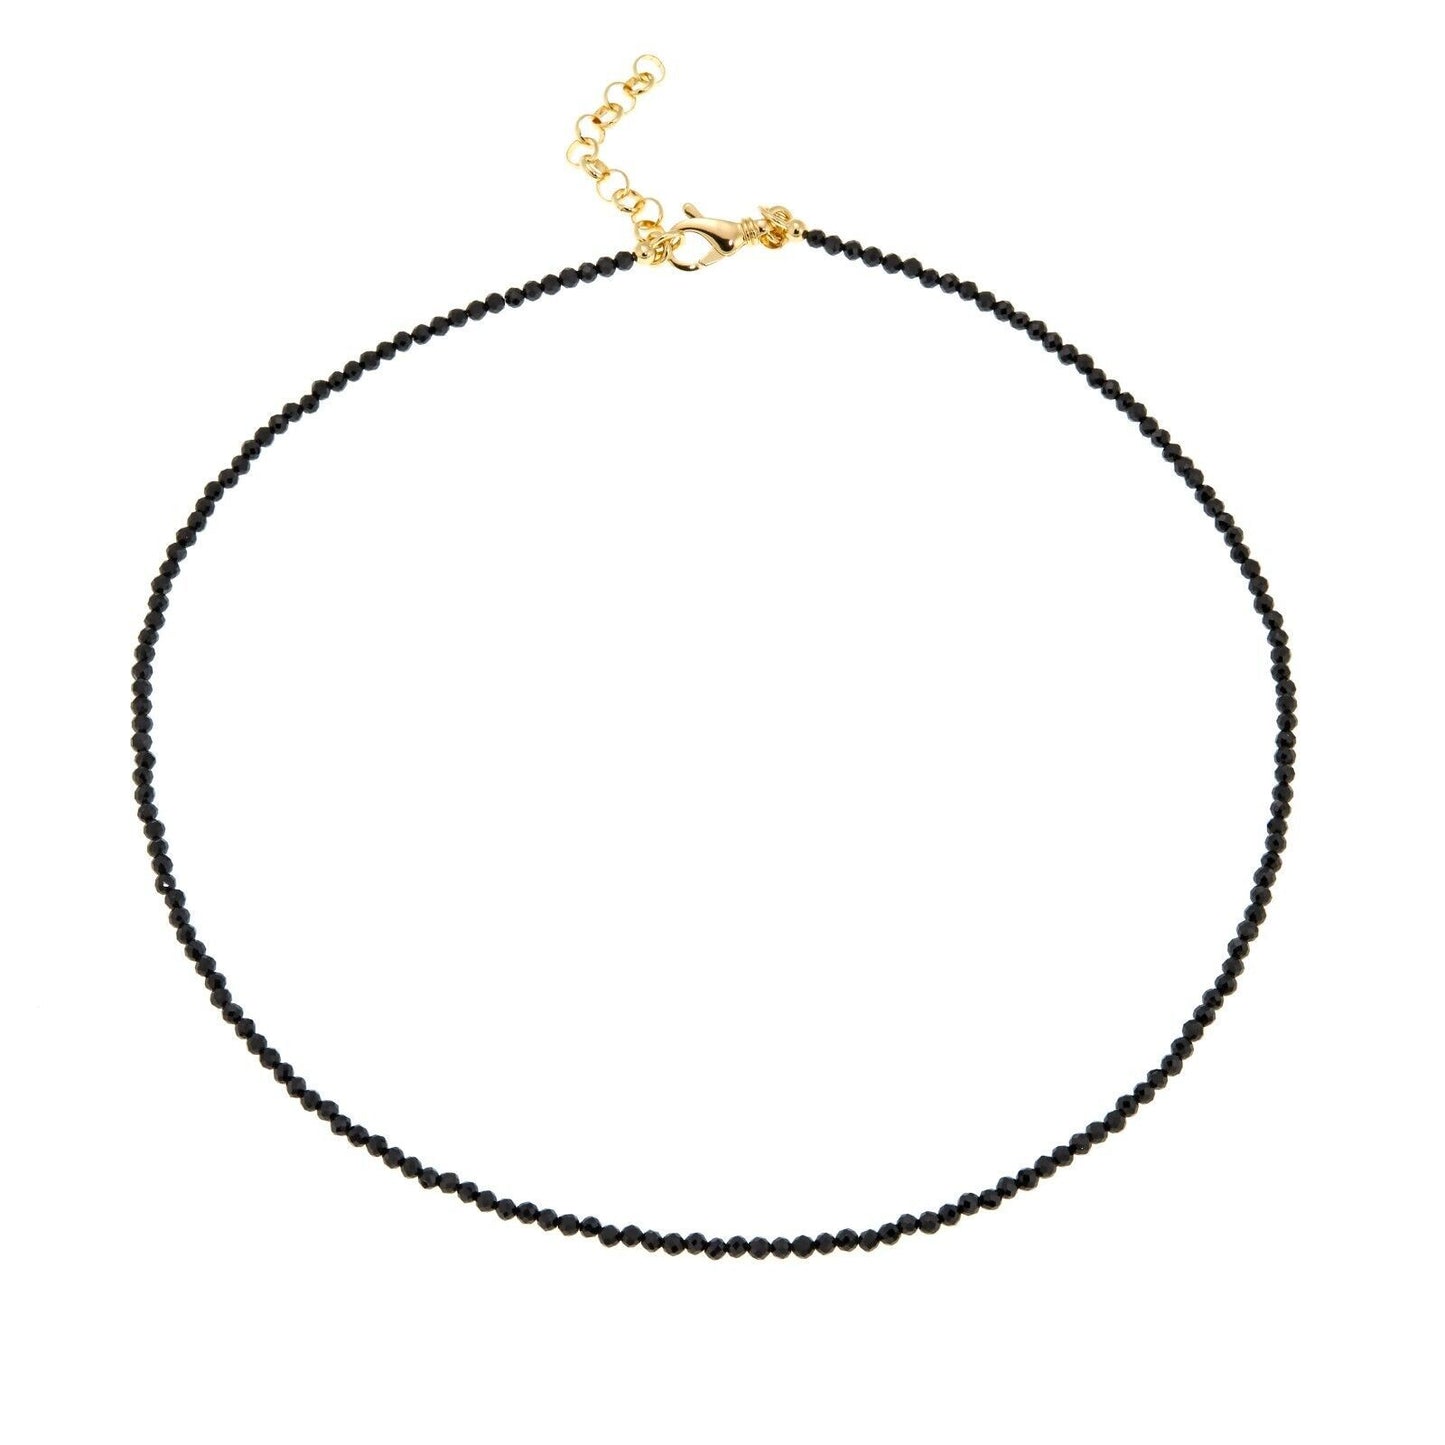 Bellezza Black Spinel Bead Bronze Necklace. 18"